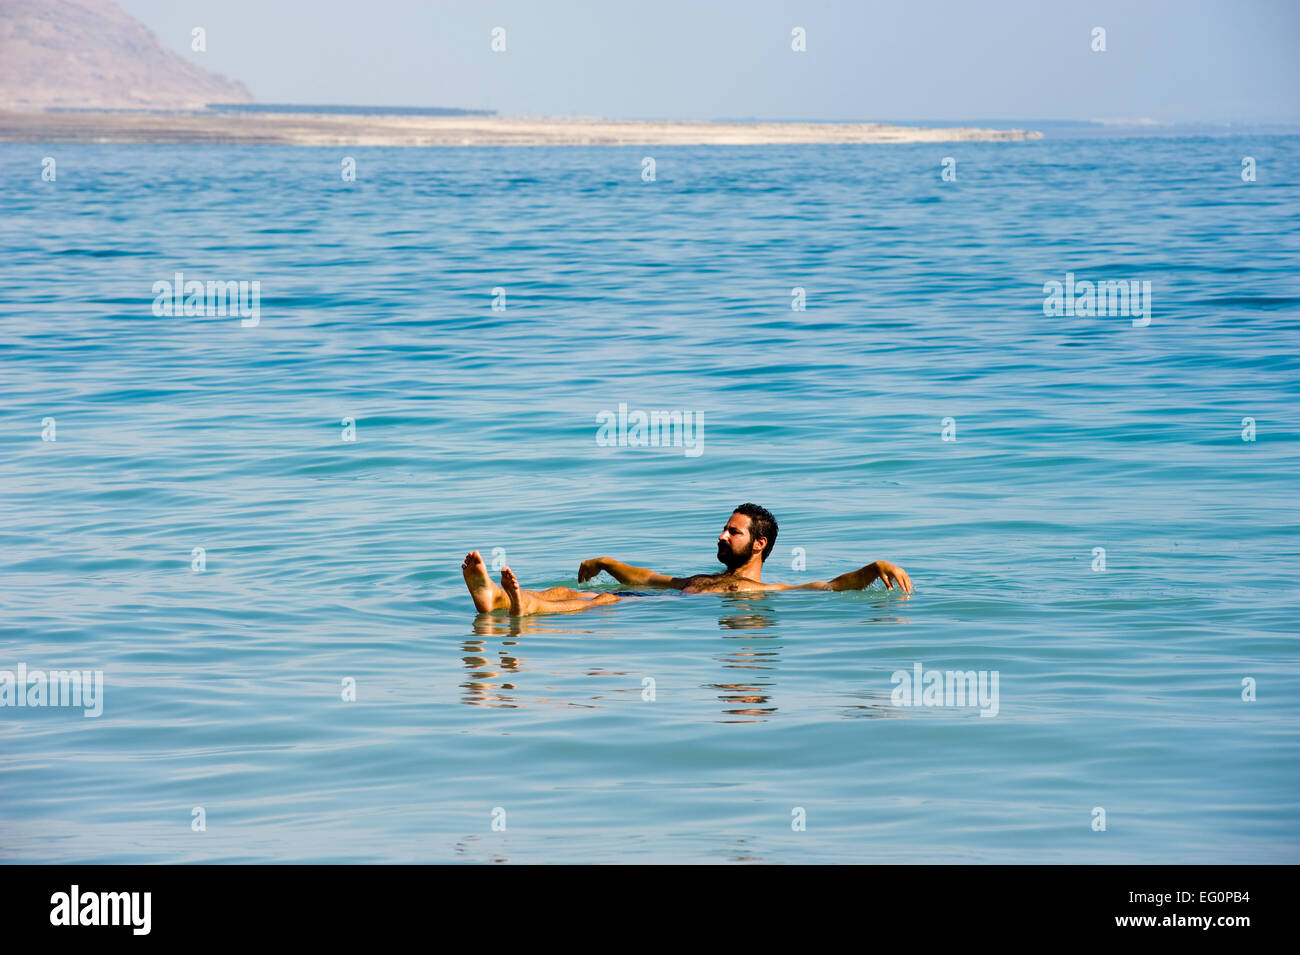 El Mar Muerto; Israel - 16 octubre, 2014: Un hombre flotando en el agua salada del mar muerto en Israel Foto de stock